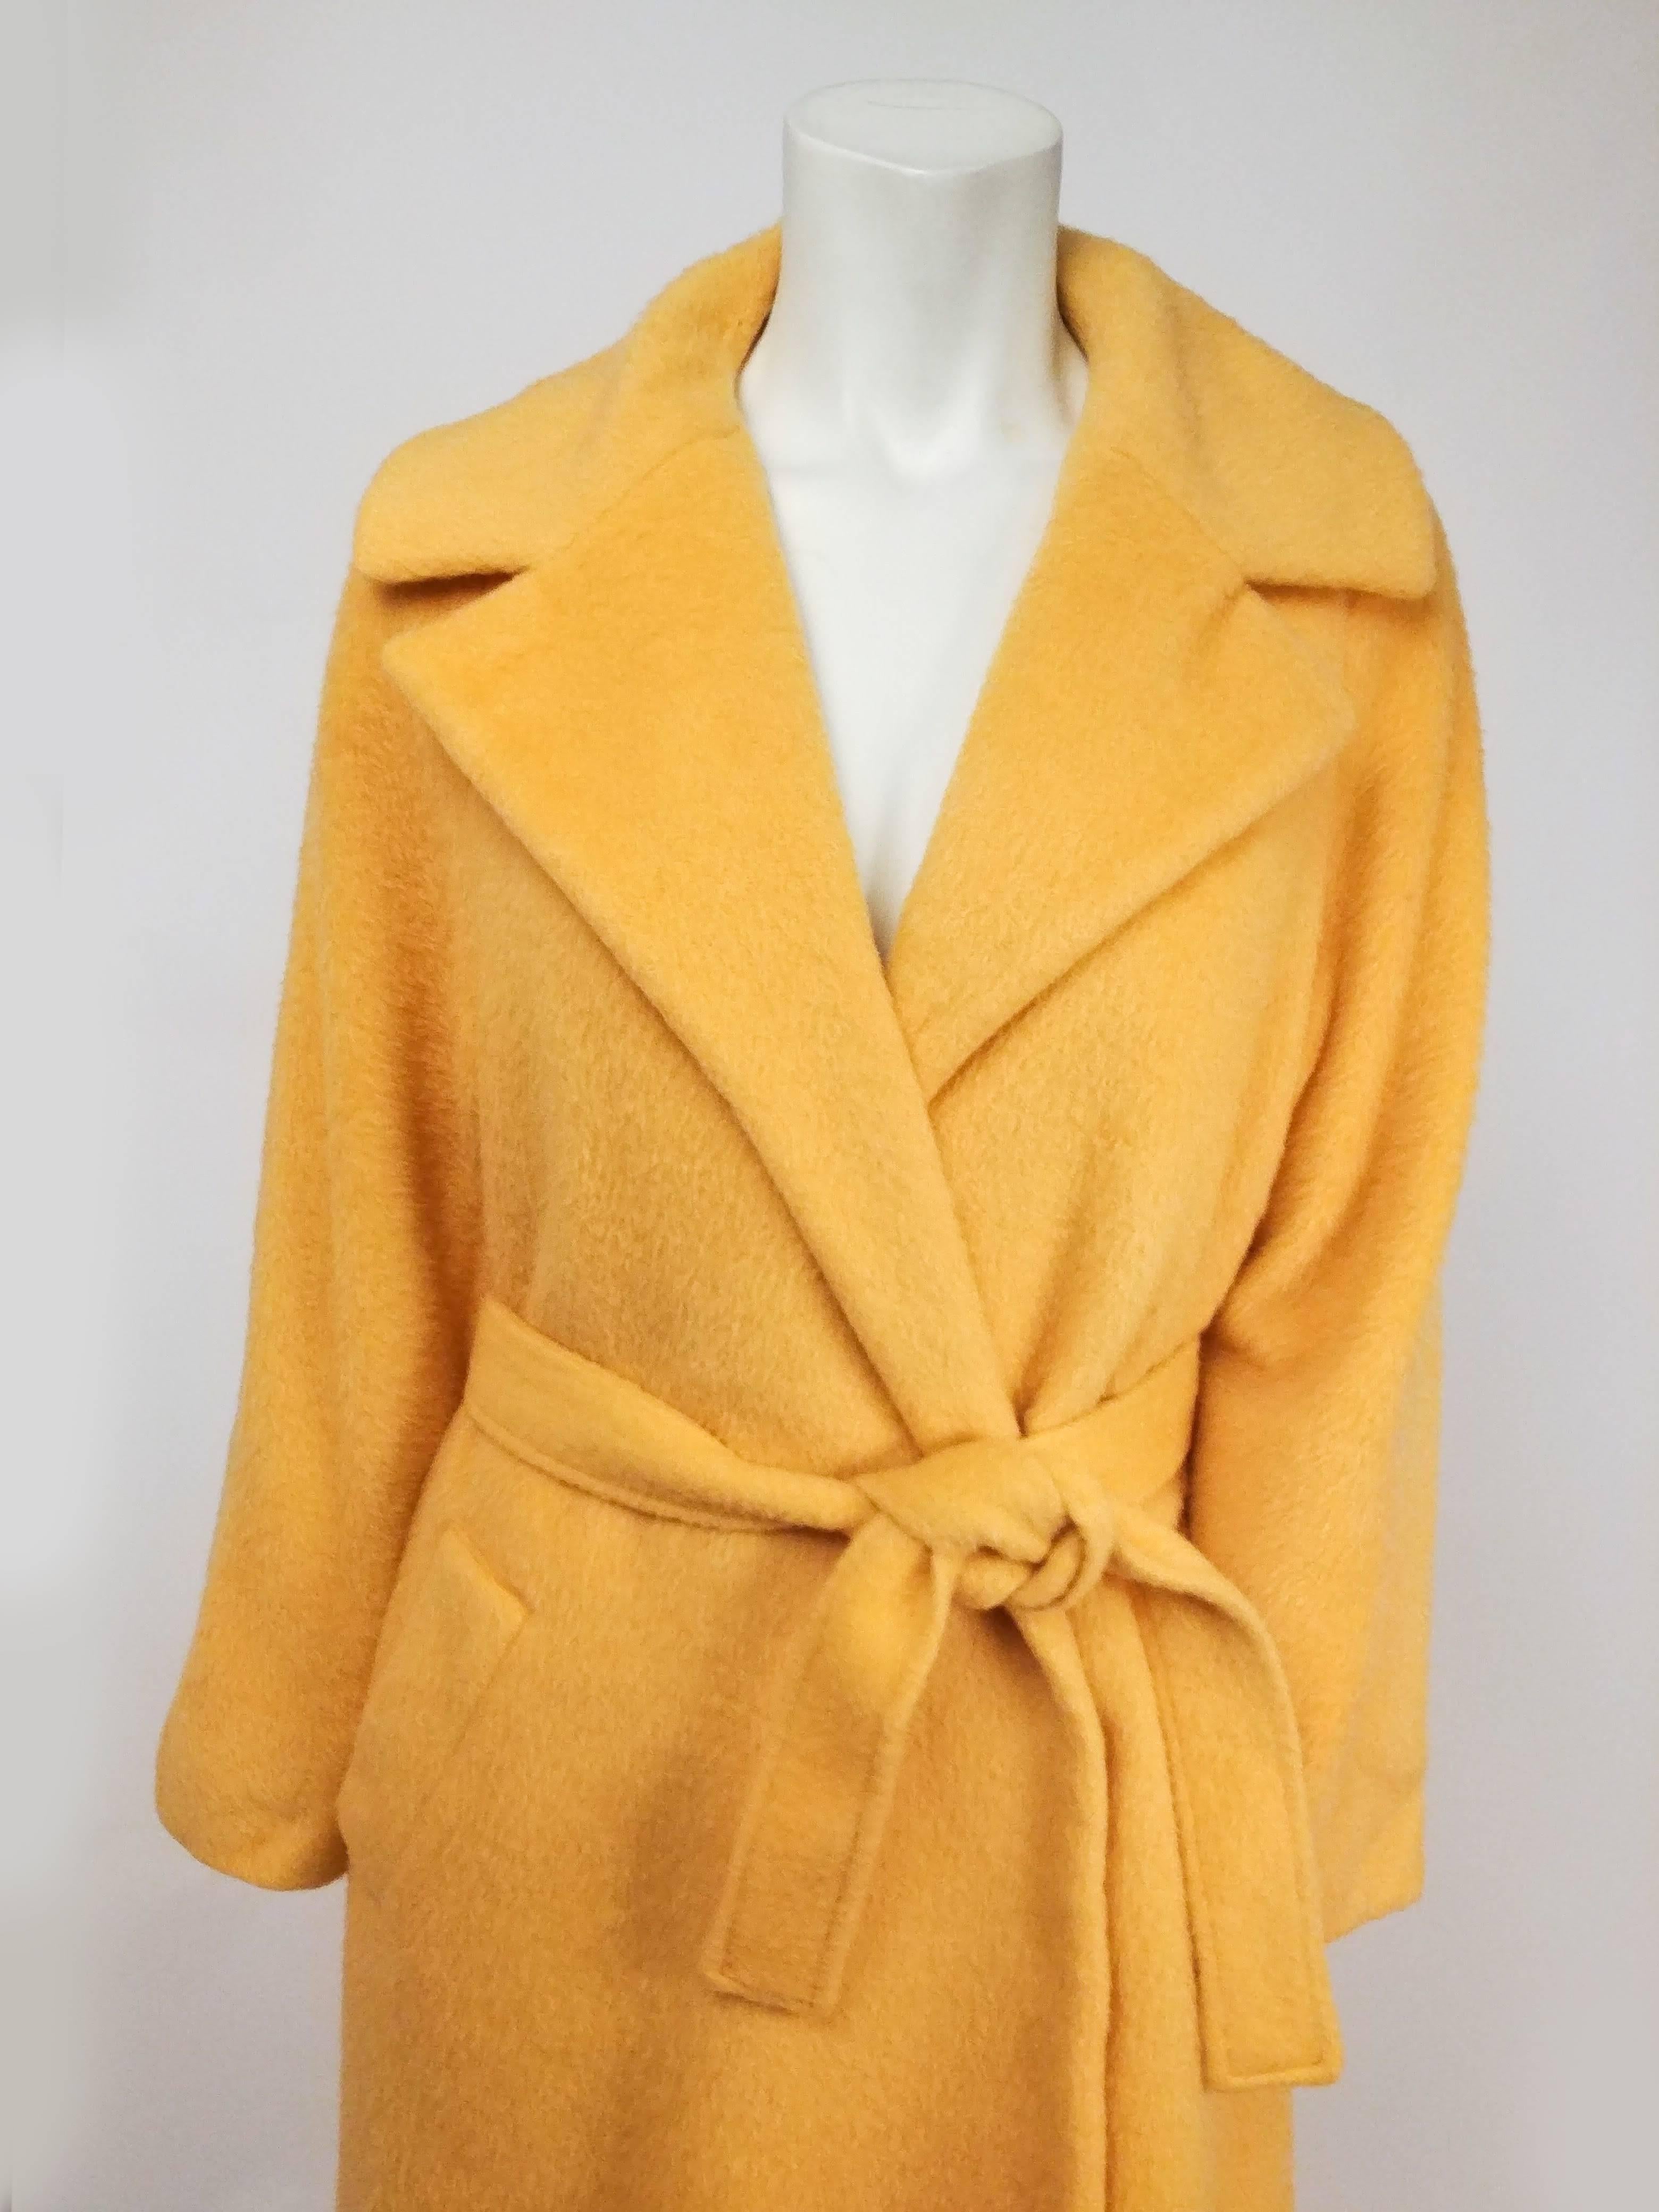 1960s Lilli Ann Buttercup Yellow Wool Coat. Ties close at waist. 